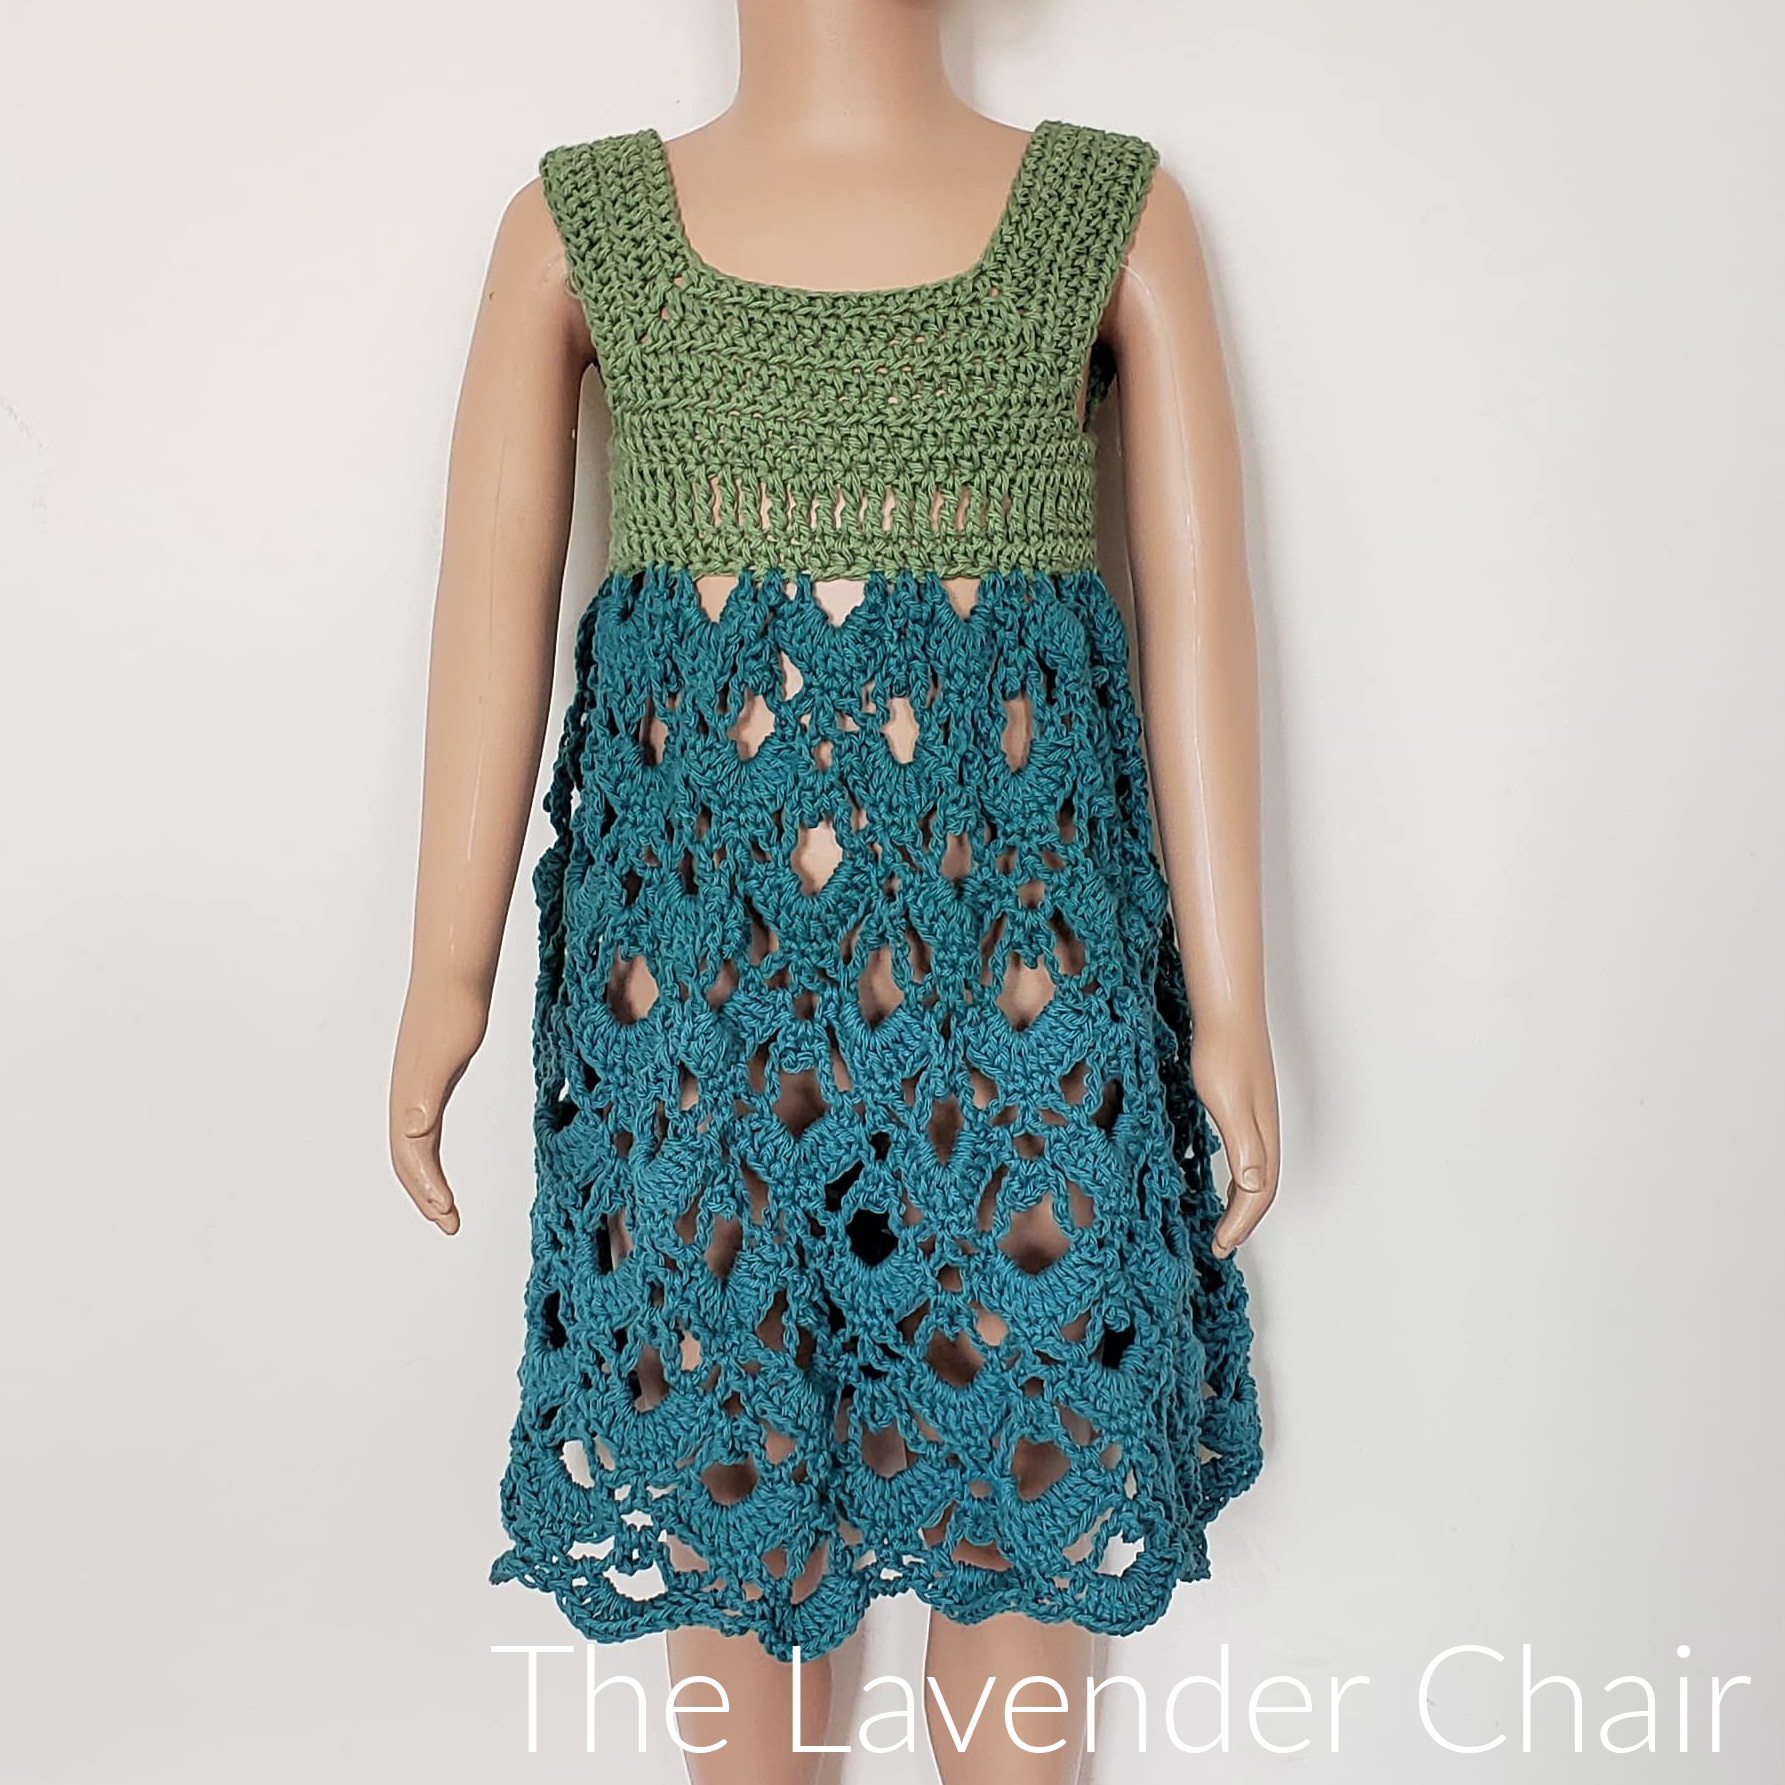 Gemstone Lace Dress - Free Crochet Pattern - The Lavender Chair